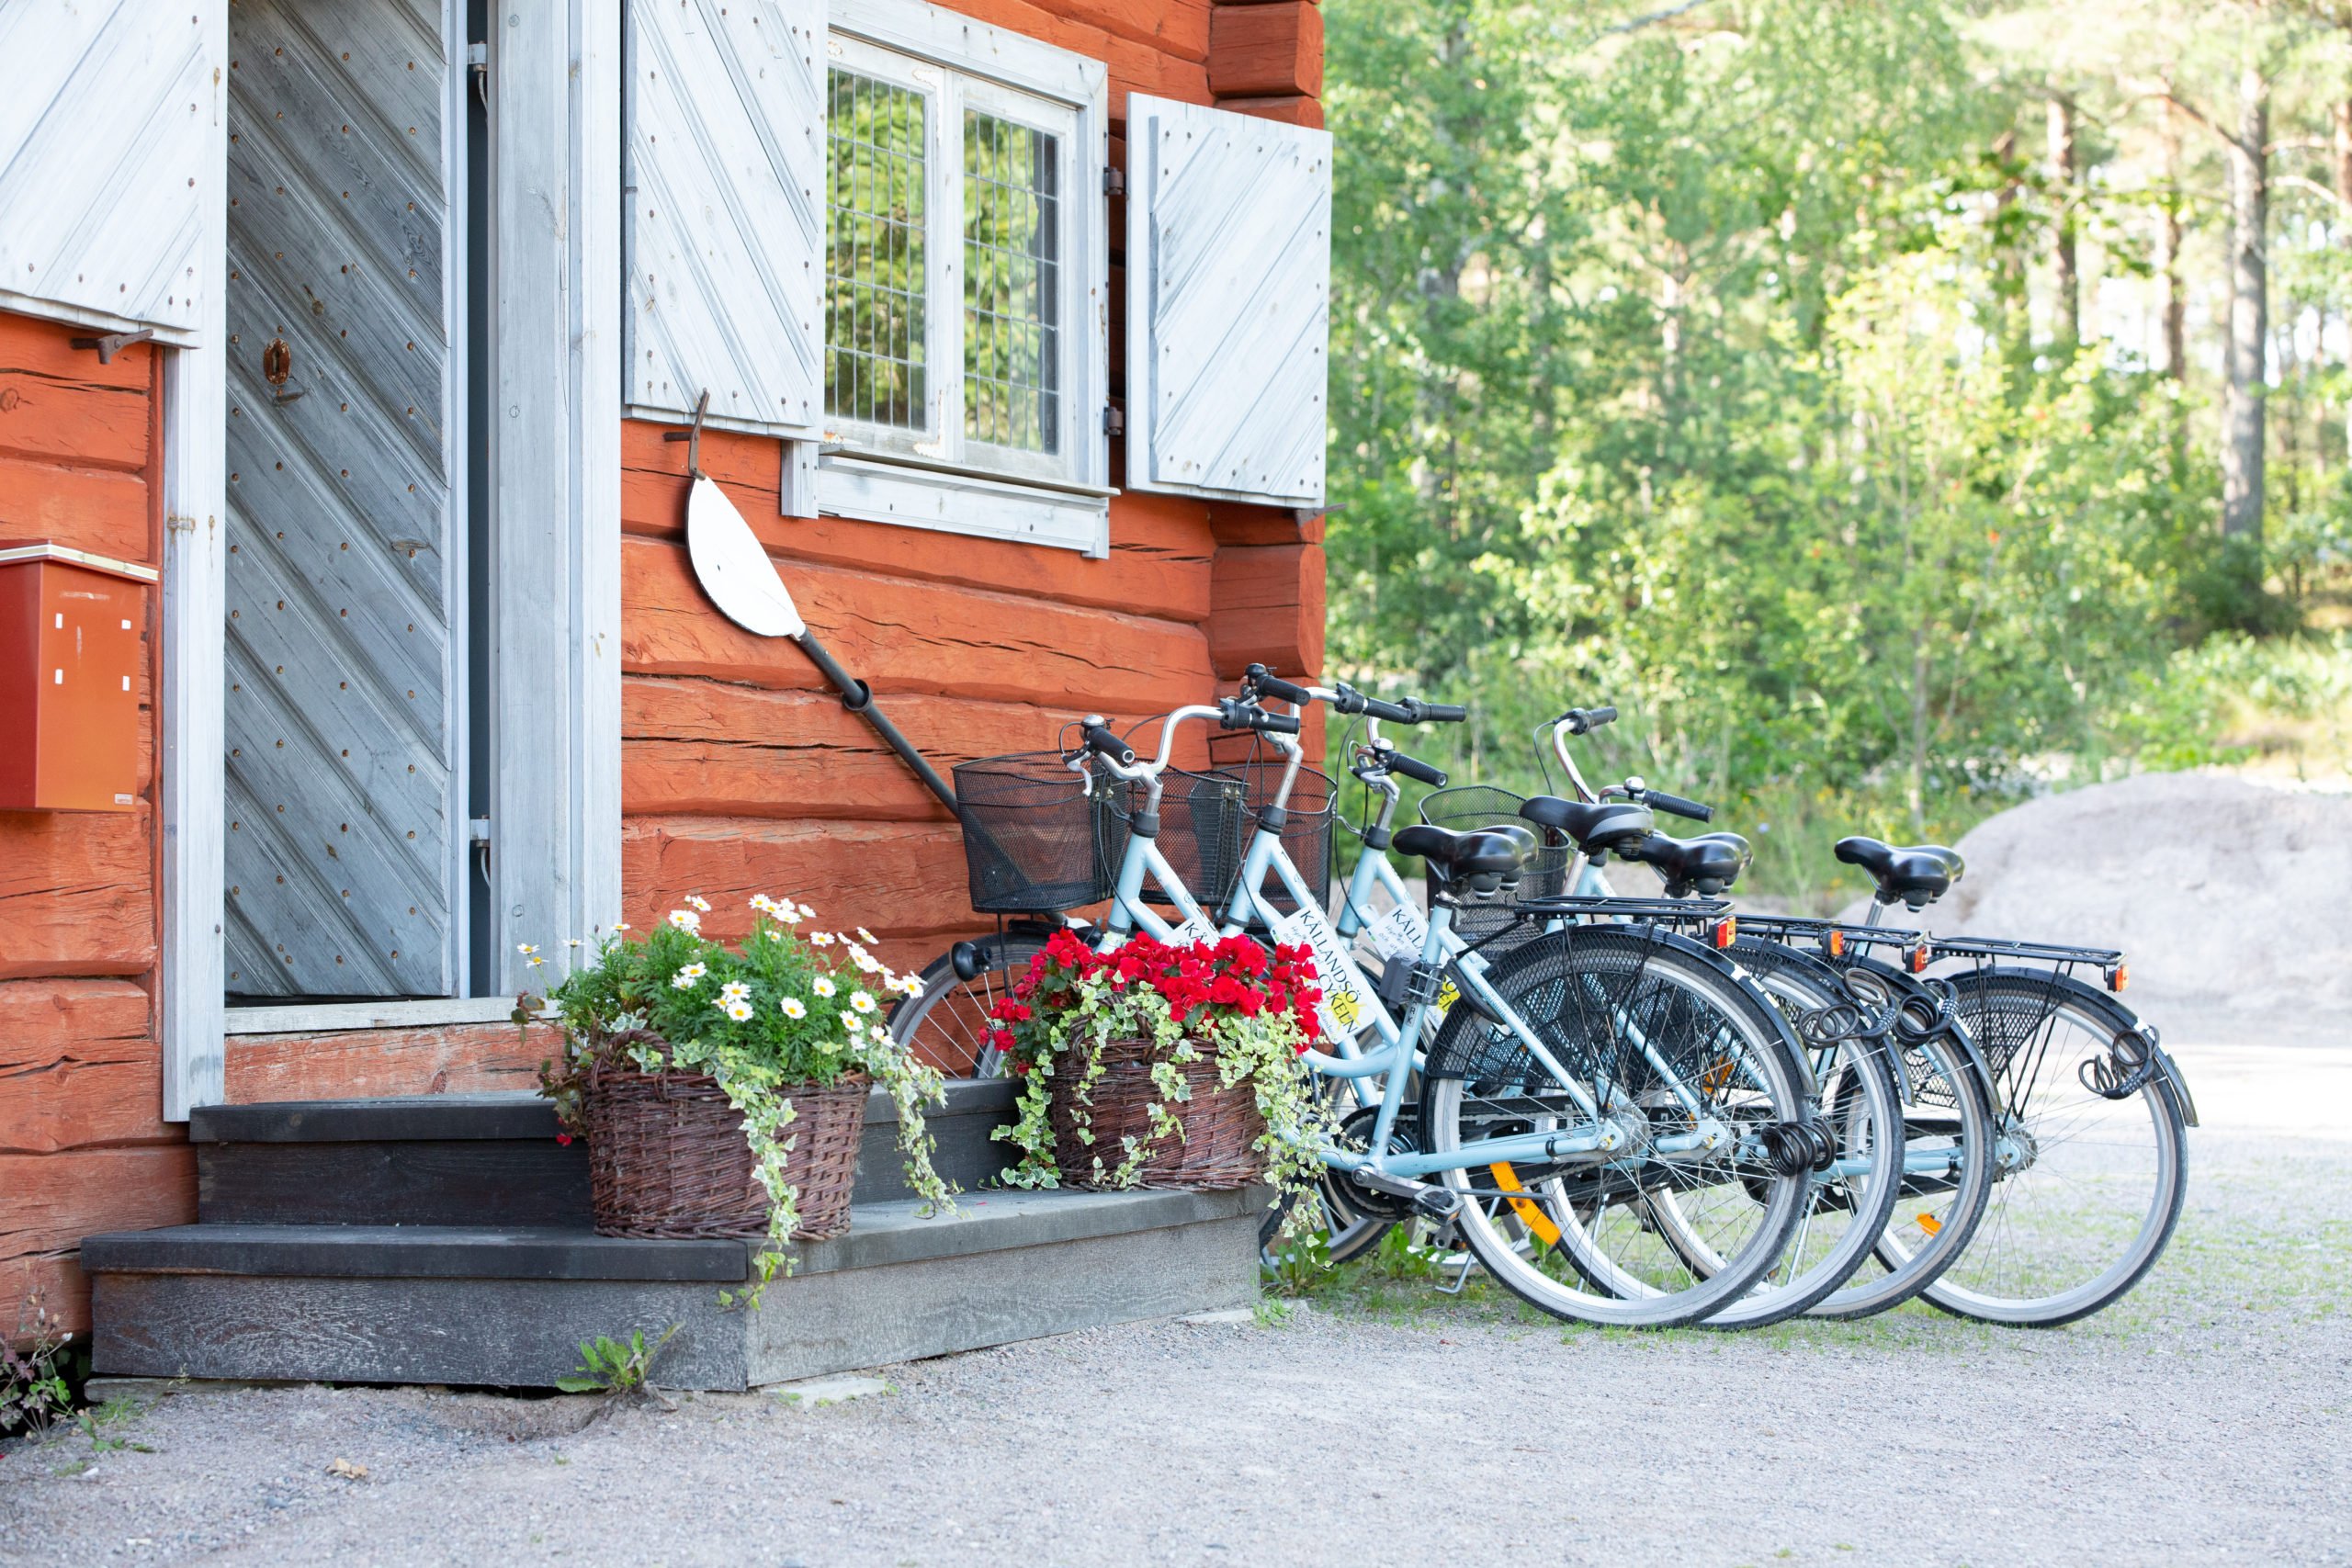 Vänerleden is Sweden’s sixth national cycle route